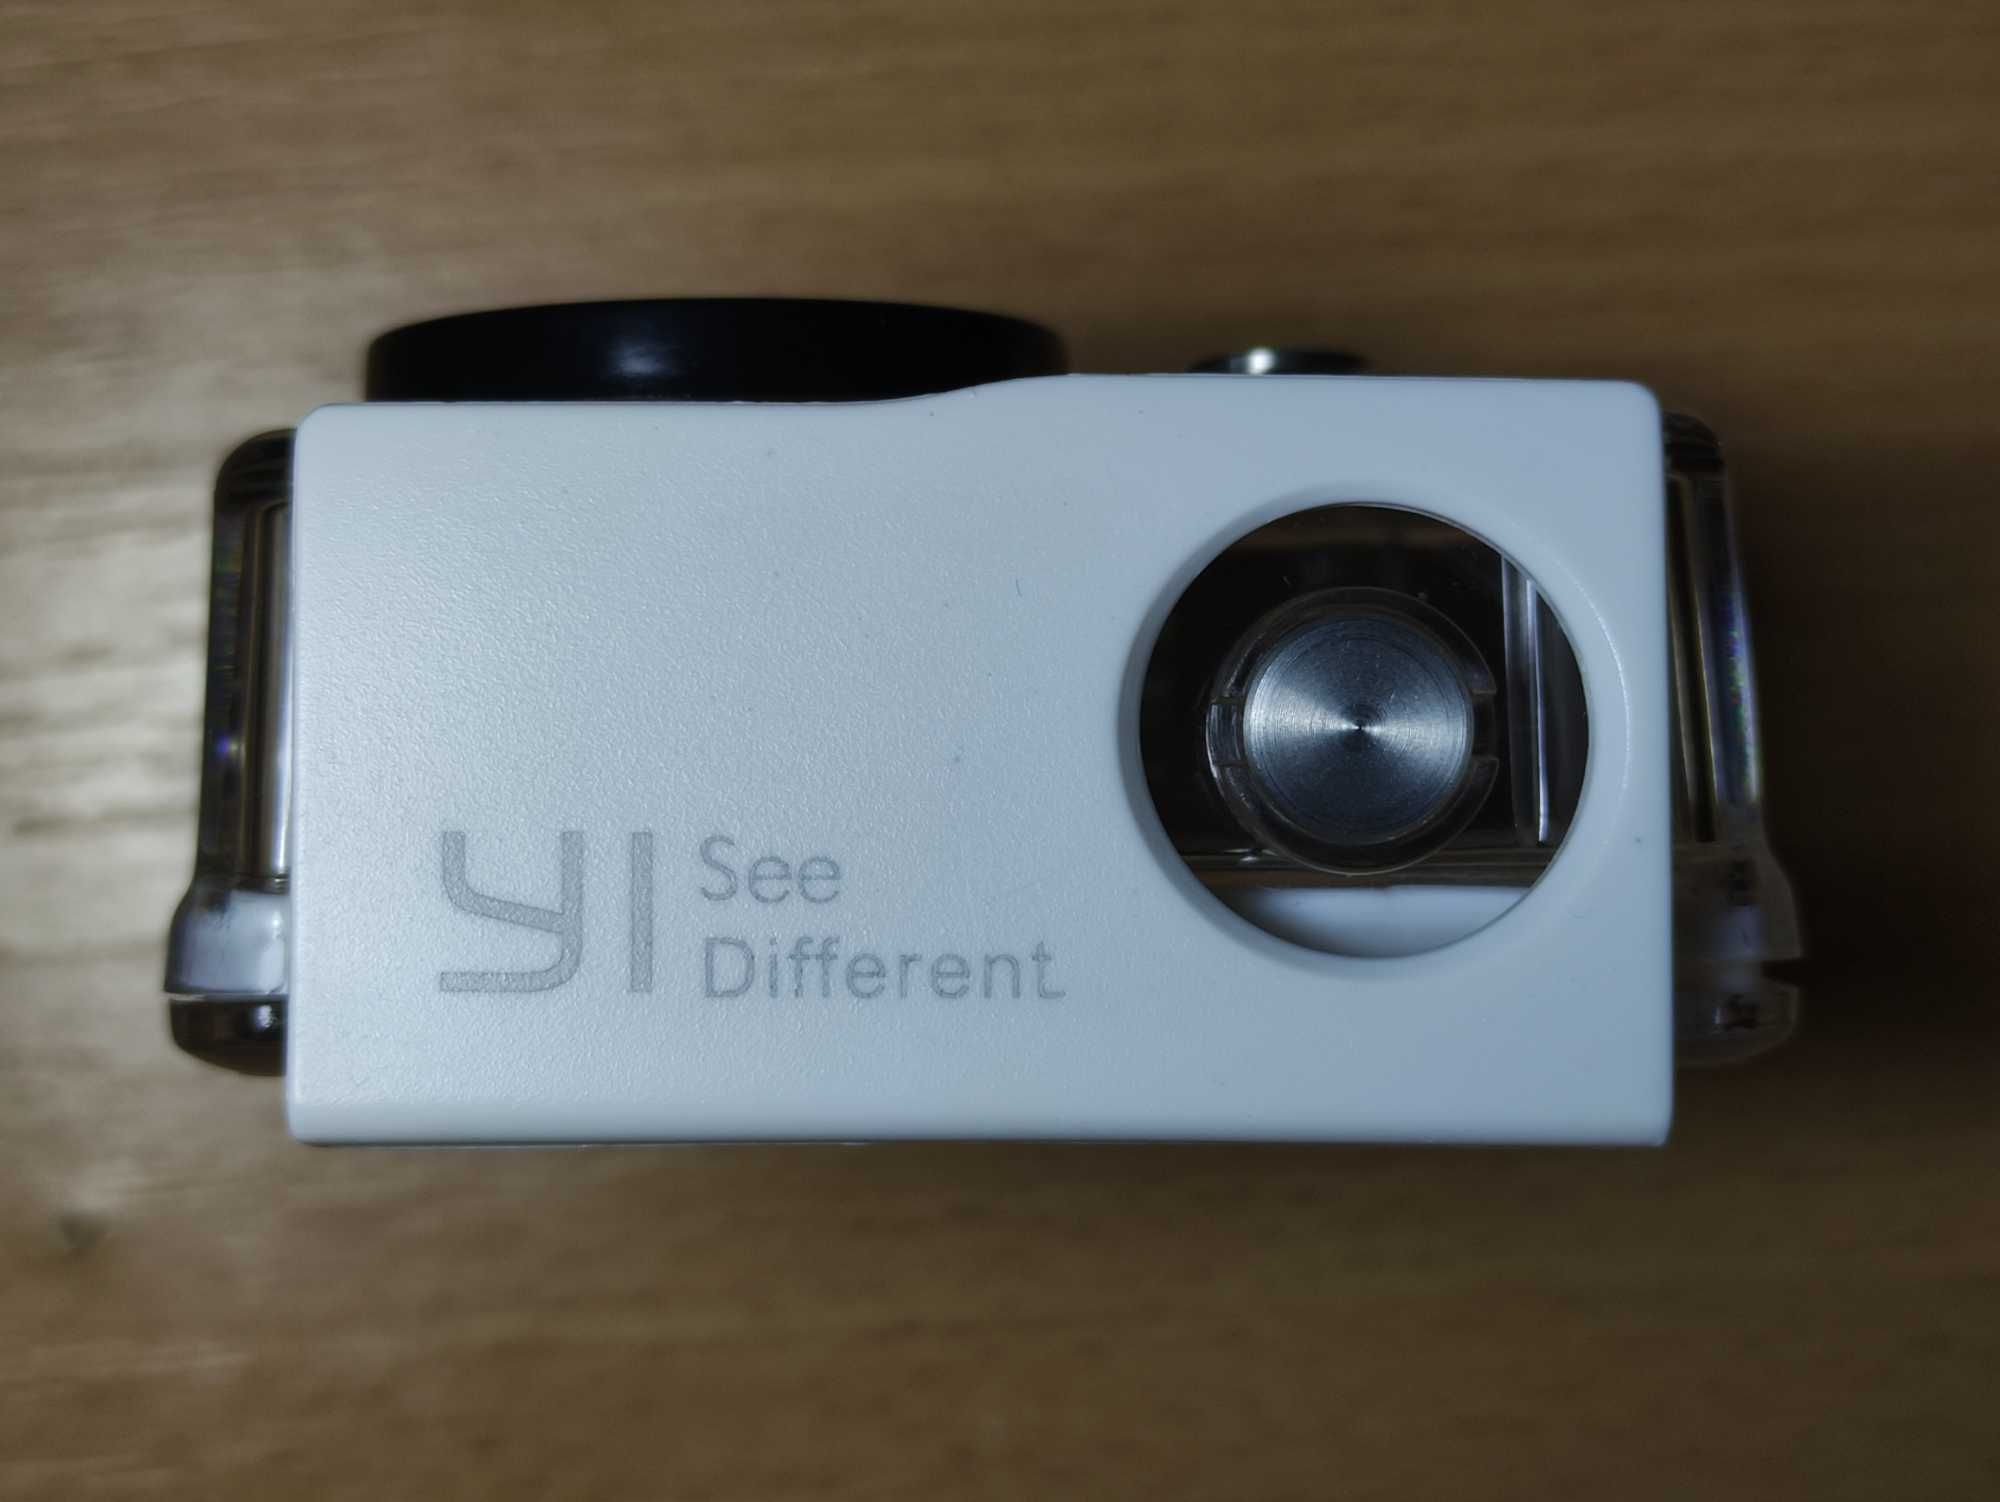 Екшн-камера Xiaomi Yi Action Camera: аквабокс, монопод, пульт, коробка